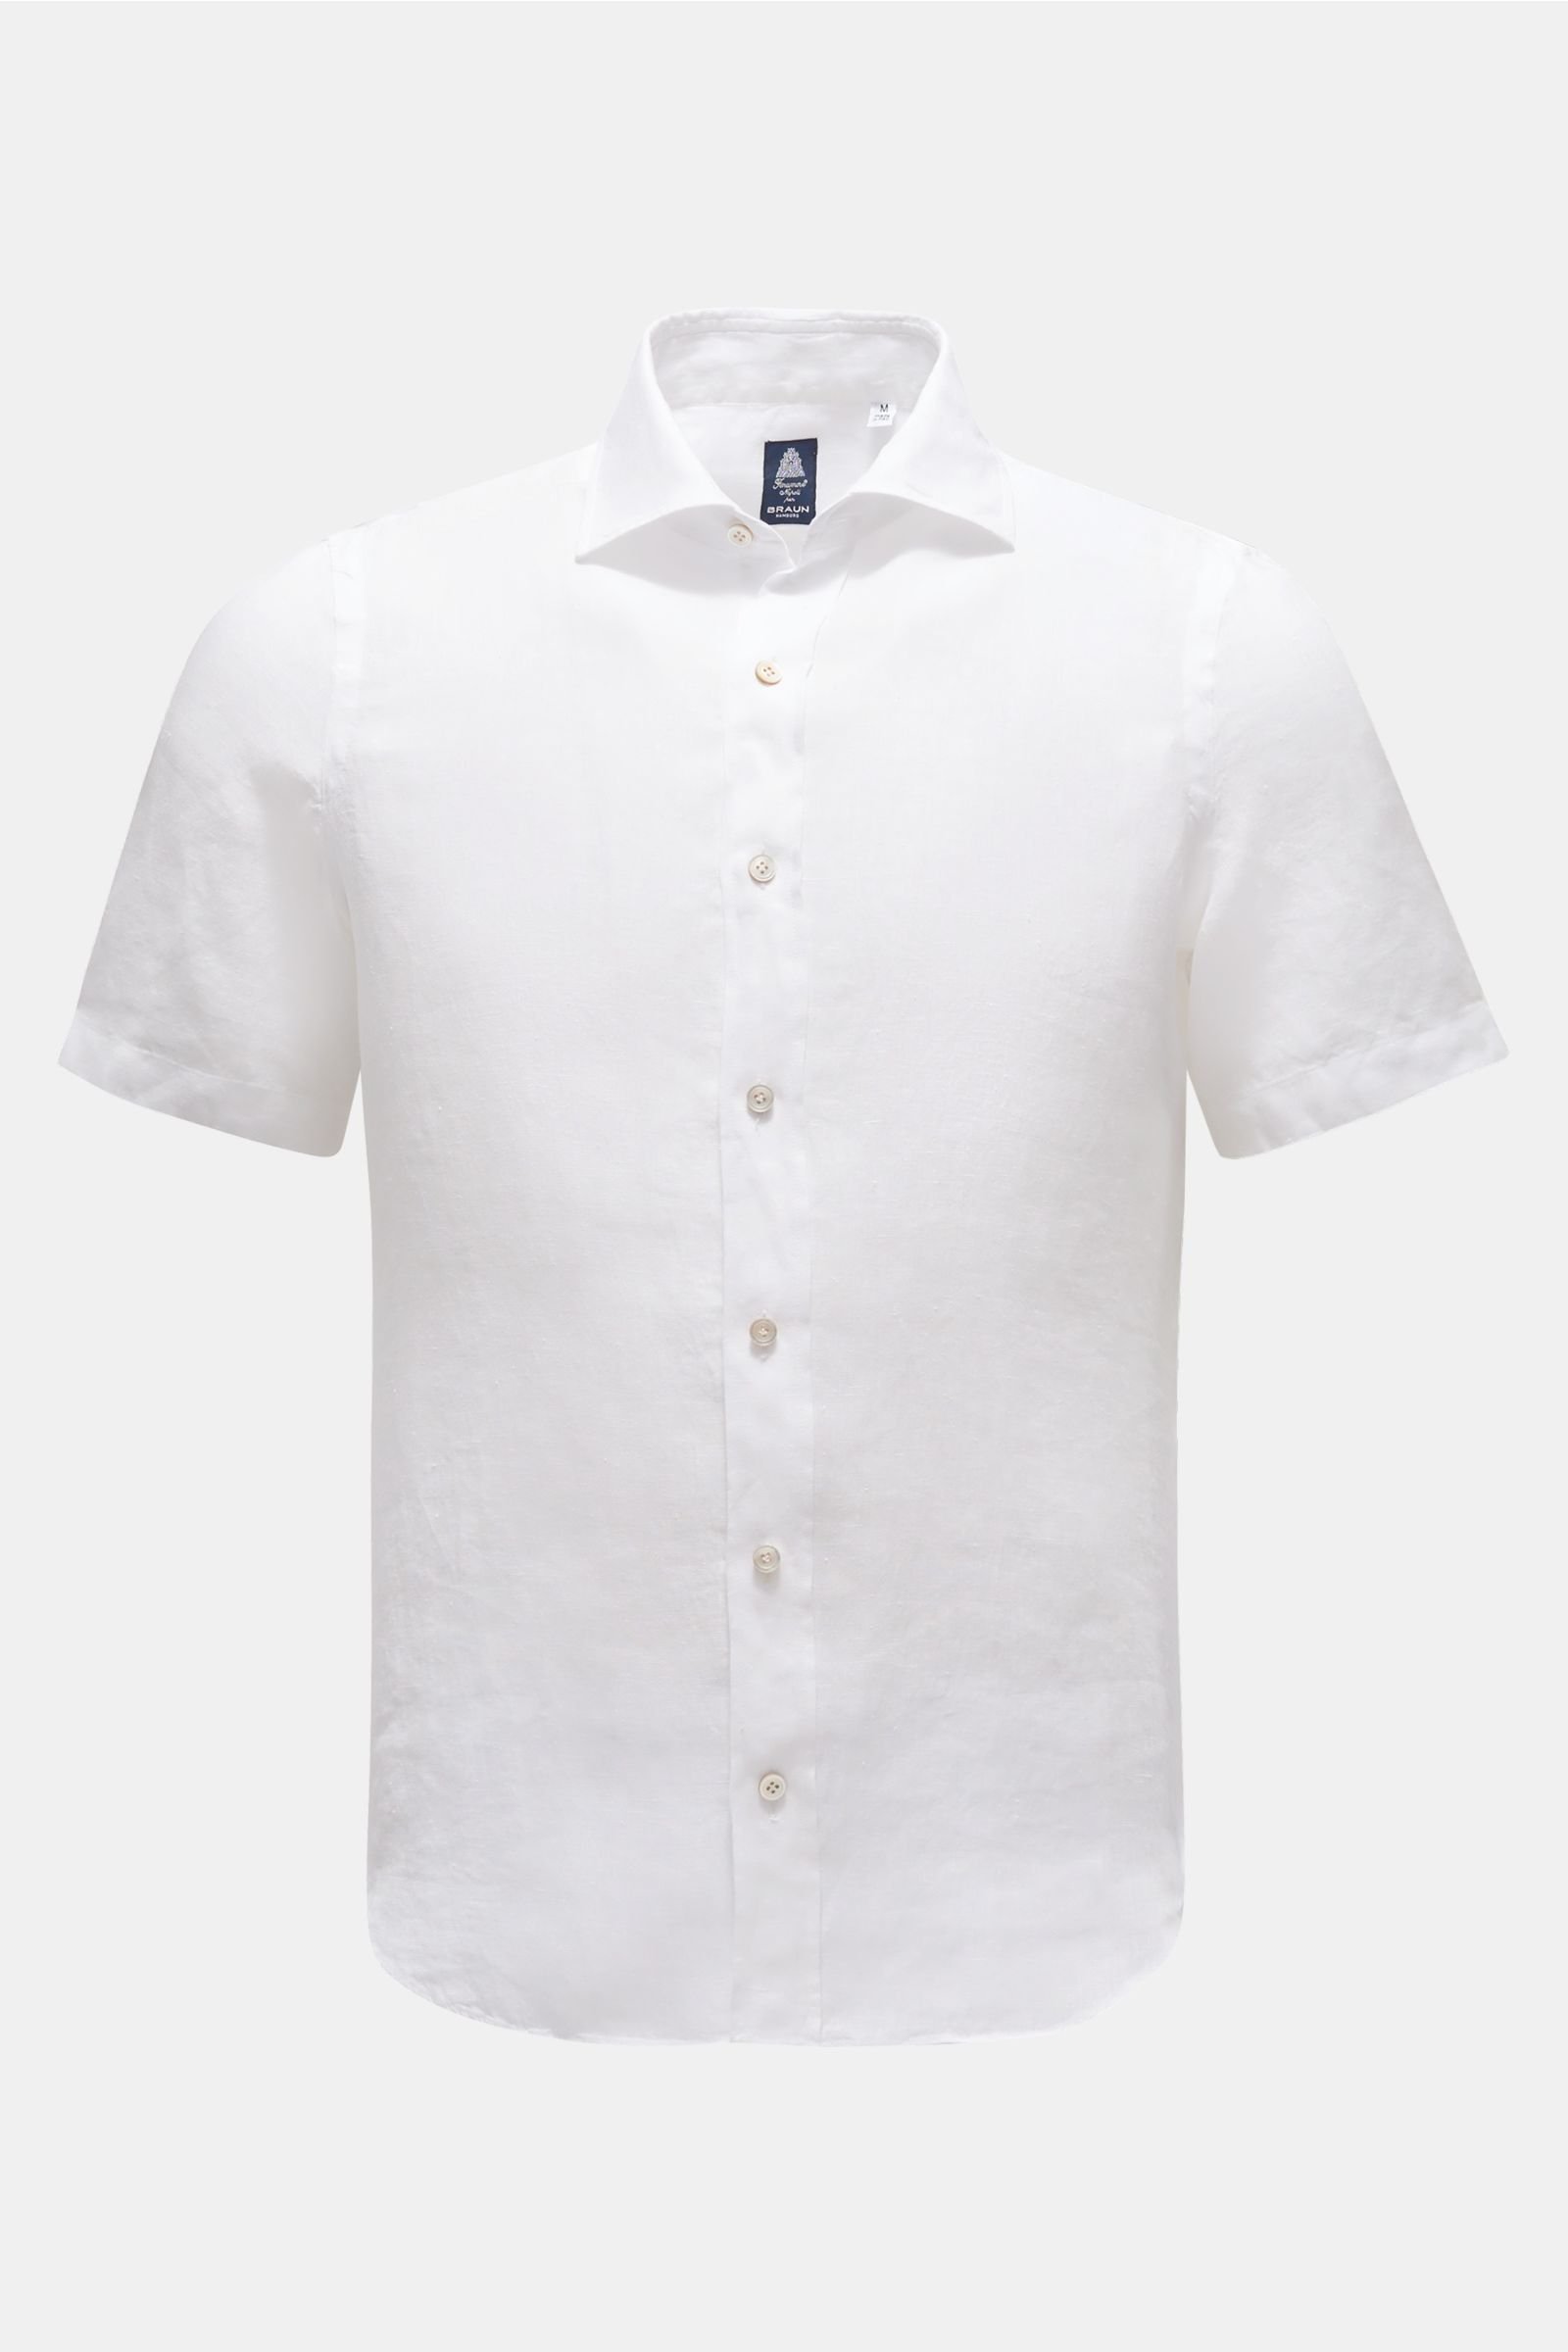 Linen short sleeve shirt 'Luigi Giglio' narrow collar white